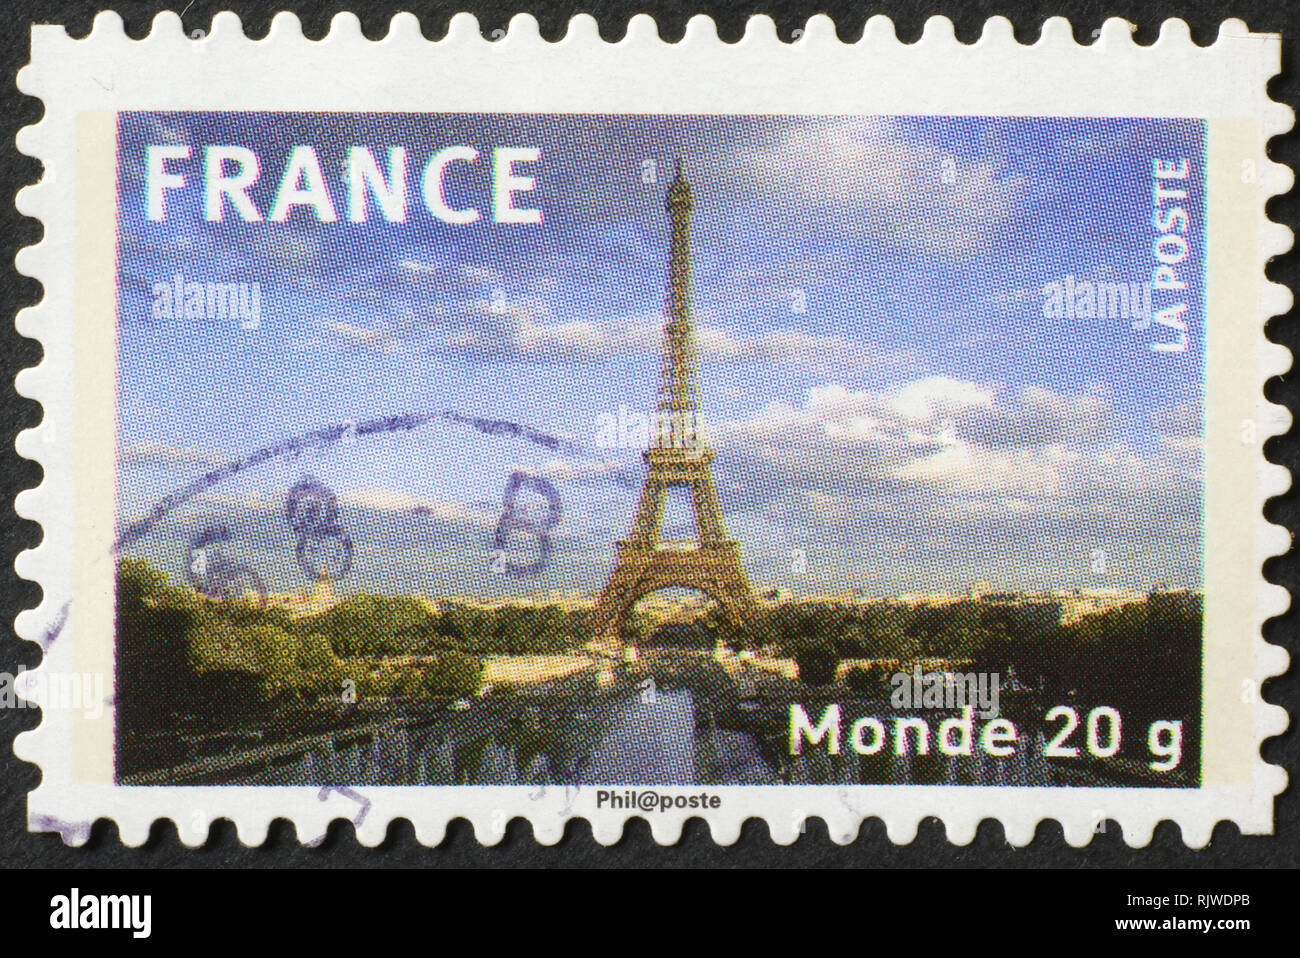 Photo Album IA#946 4x6 or 5x7 Pictures Paris France Eiffel Tower Vintage Stamp 